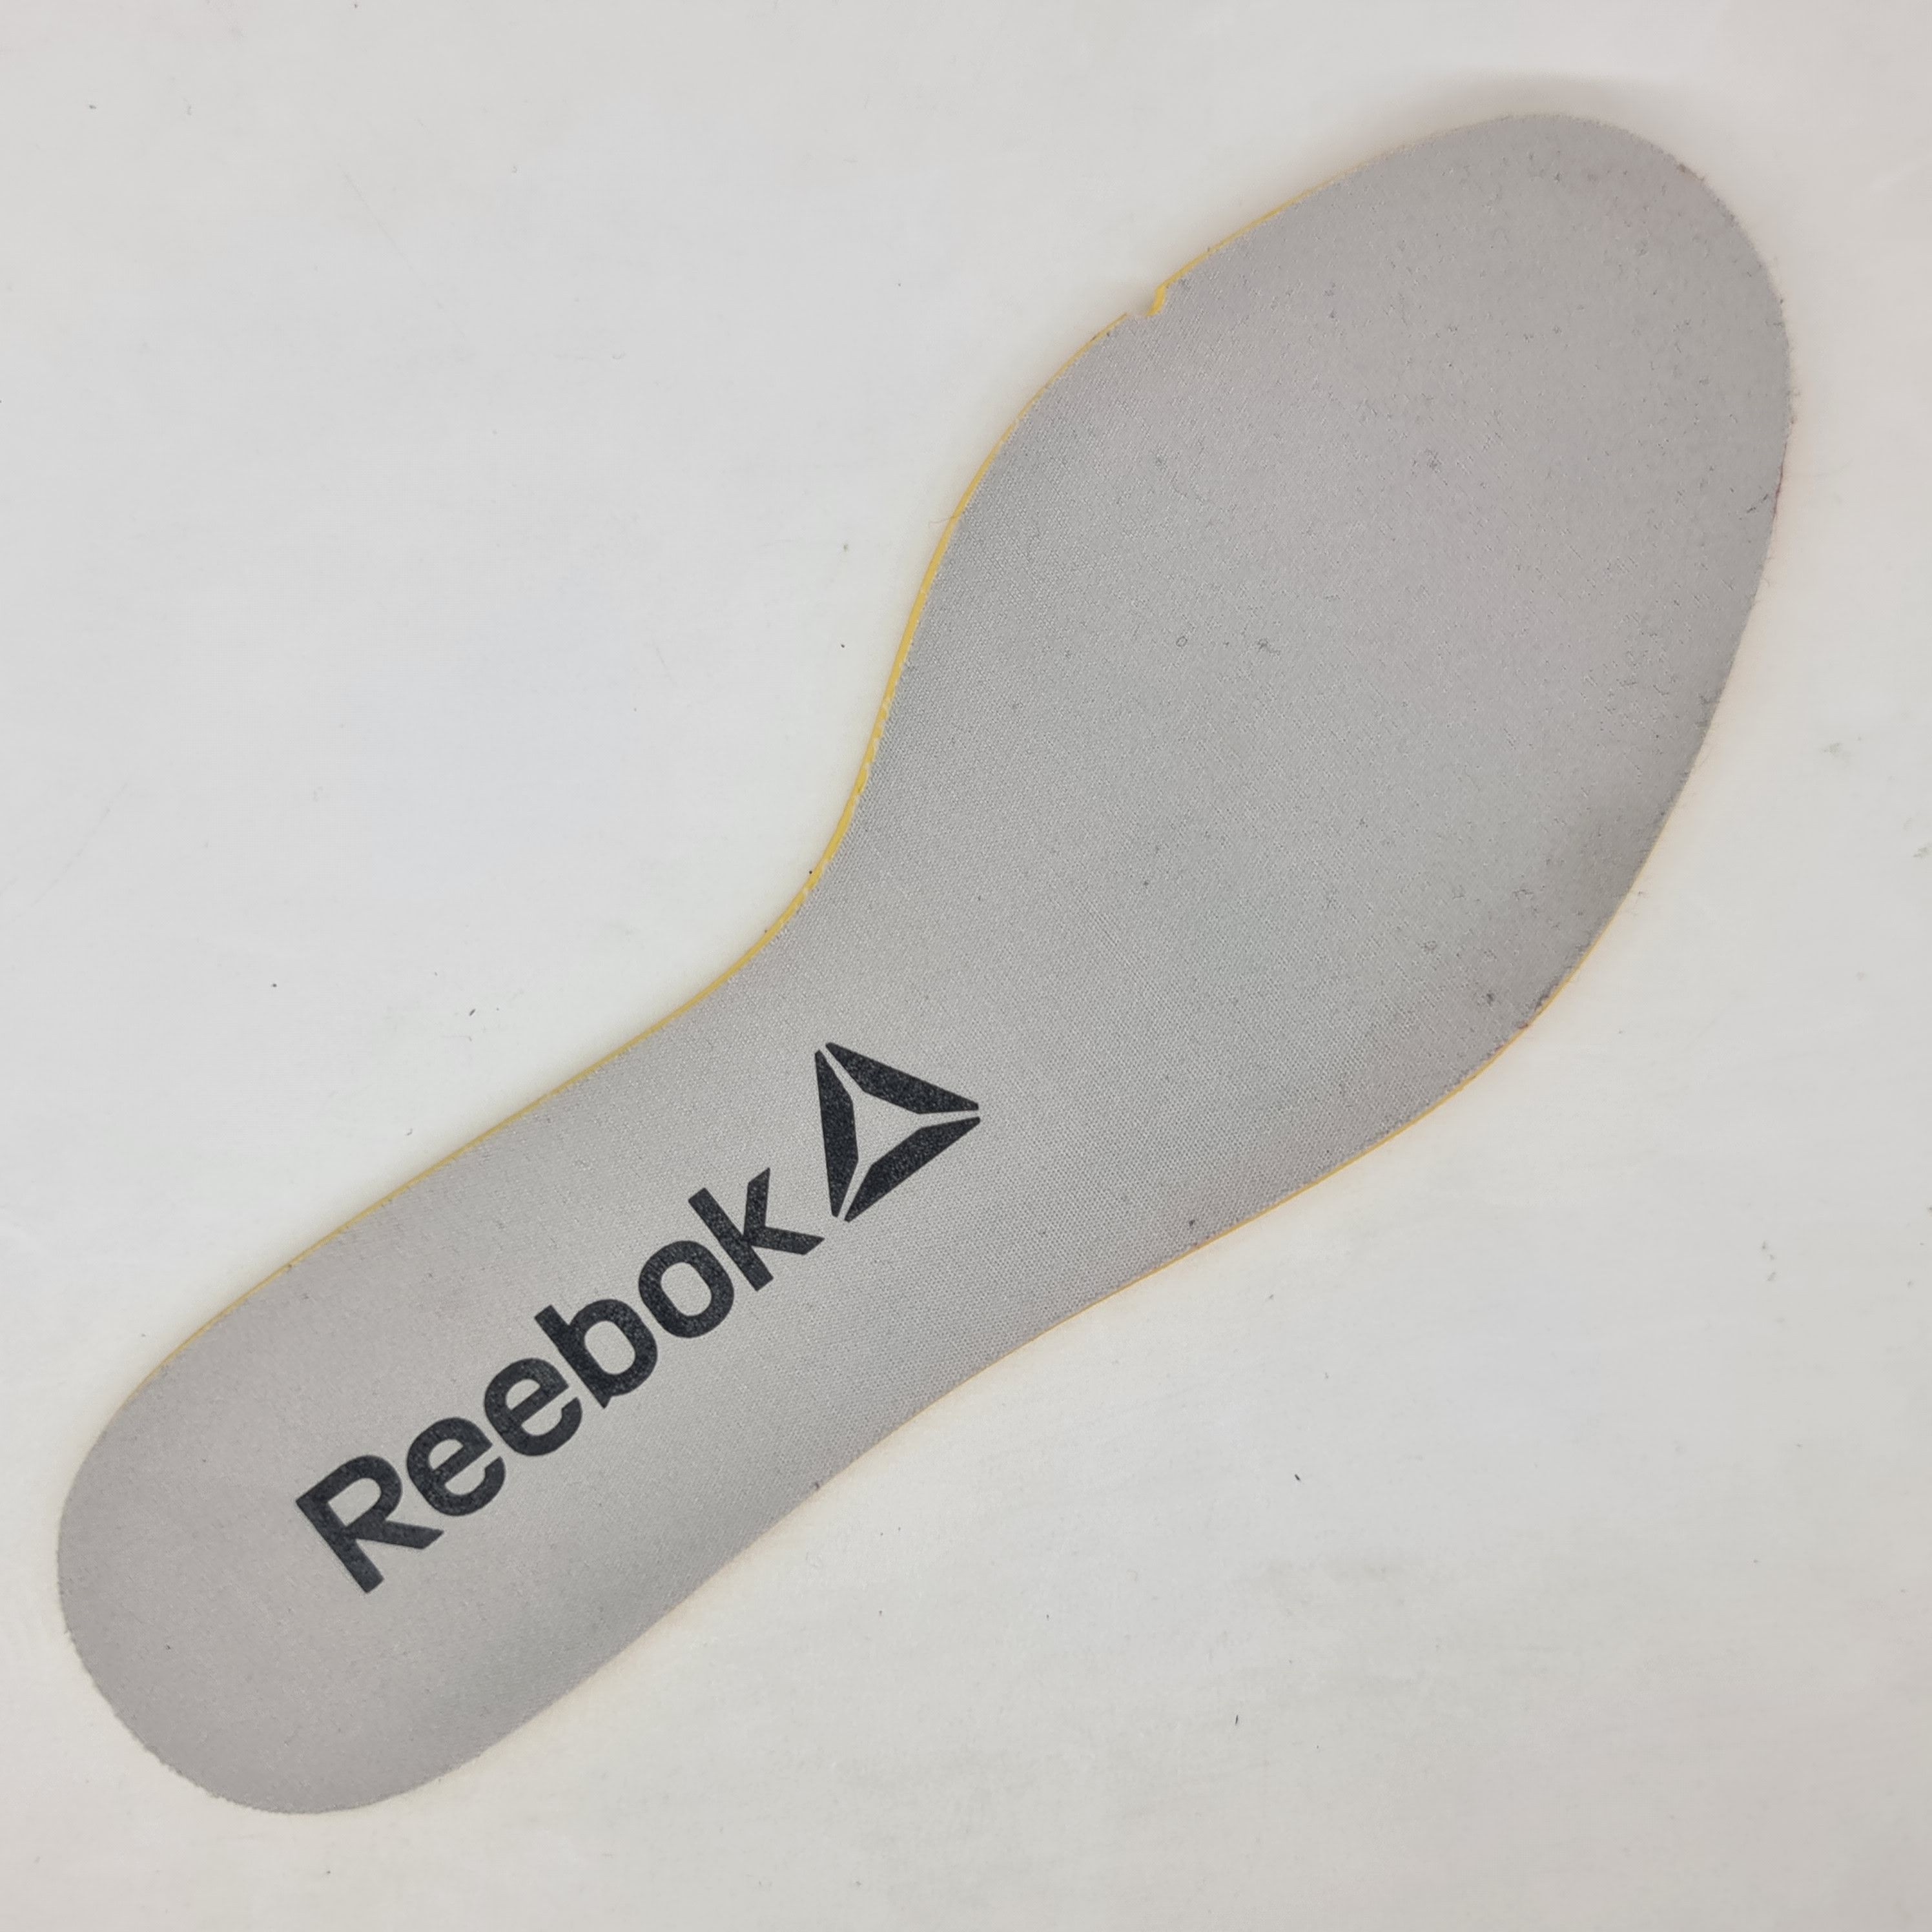 Vetements x Reebok - Gray Sock Runner - 9